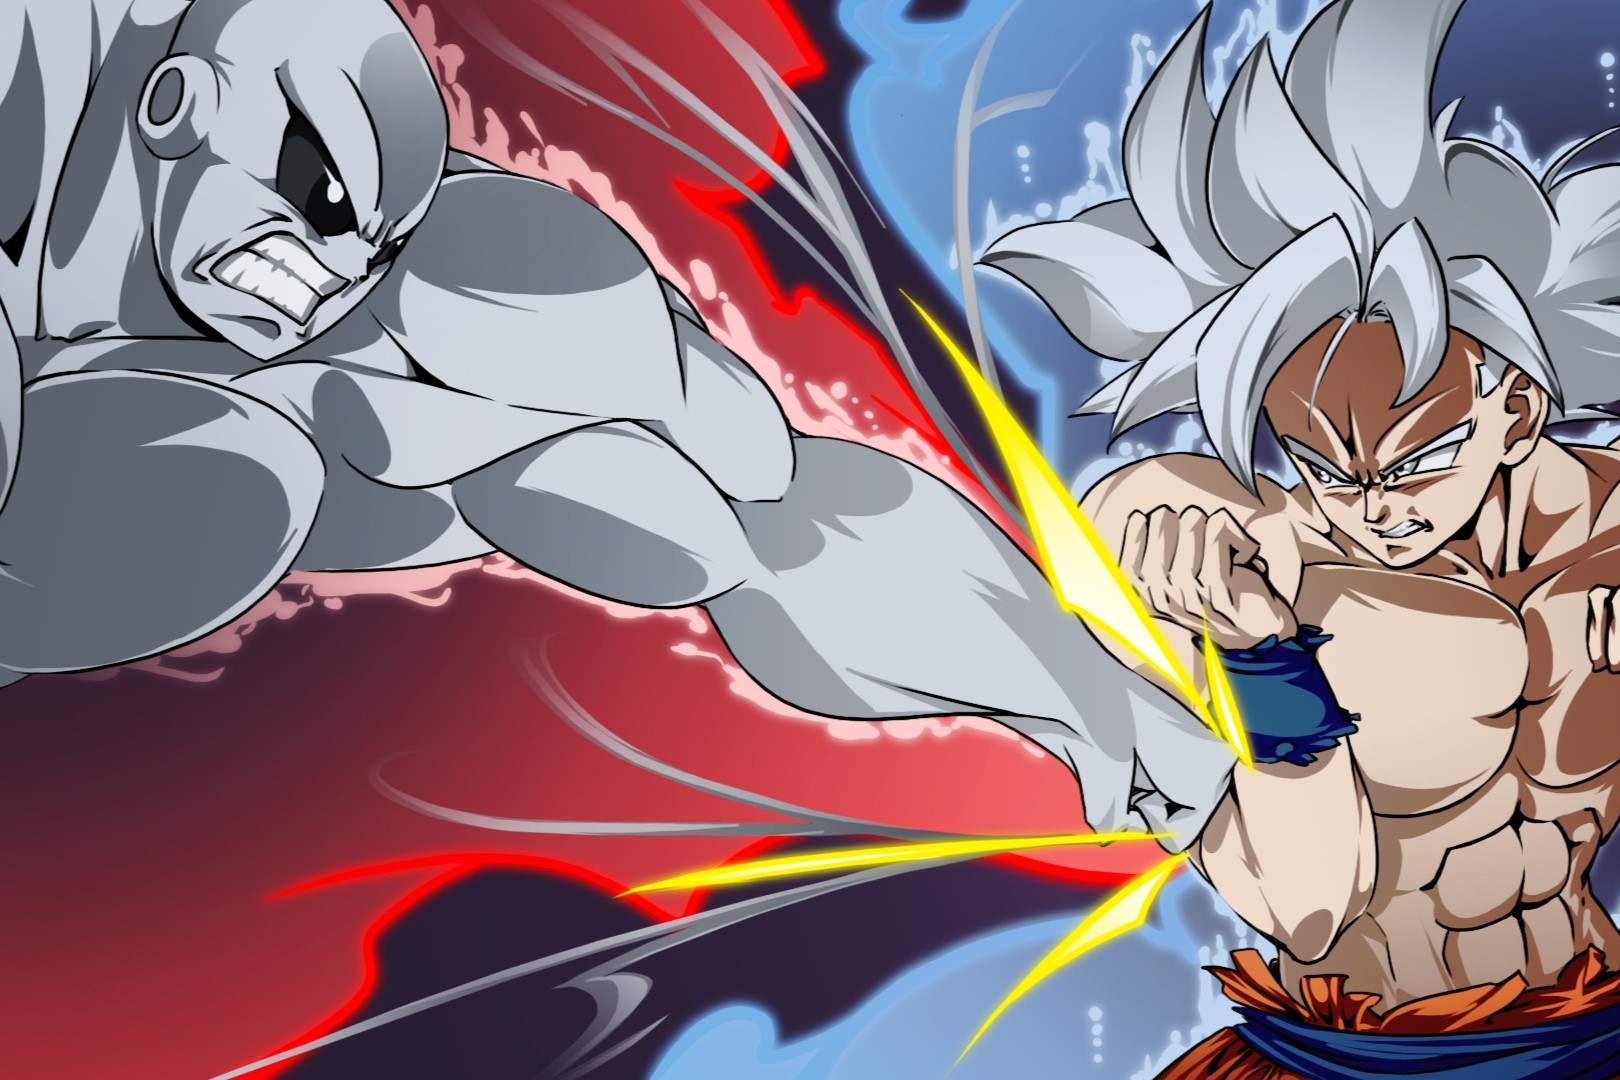 The Ultimate Showdown: Unveiling The True Power Gap Between UI Goku And Jiren In The Top Manga!